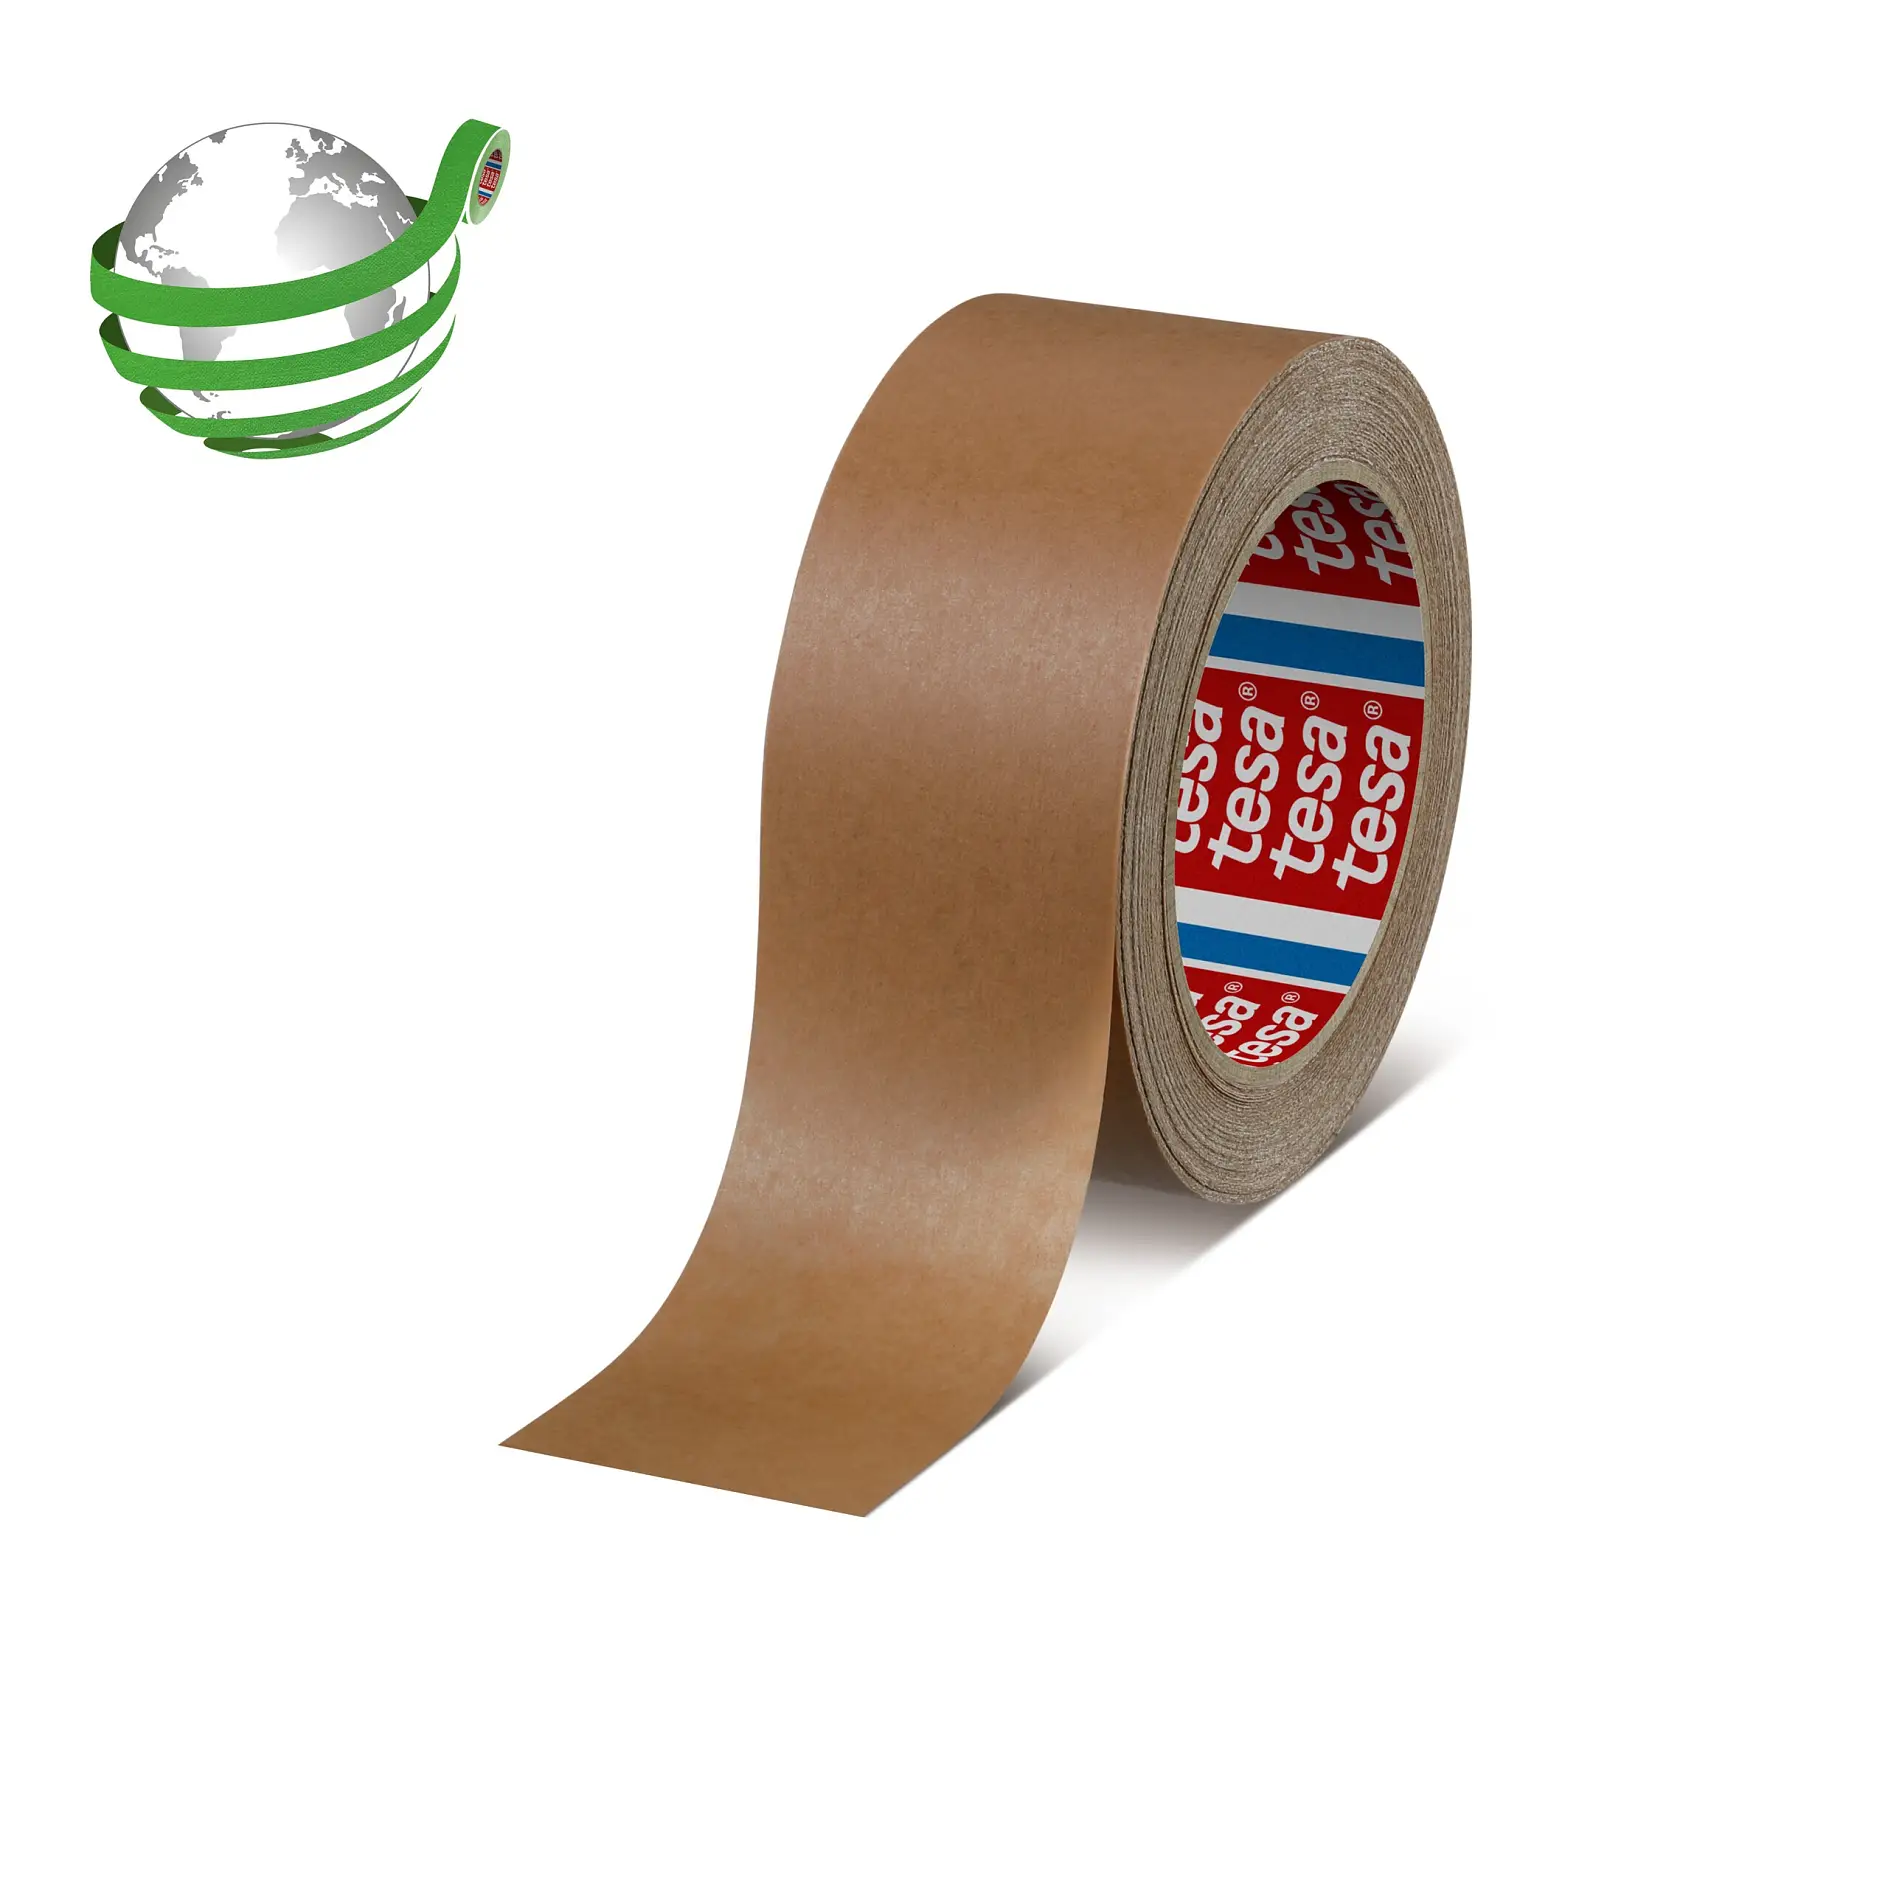 tesa-4313-pv0-paper-carton-sealing-tape-chamois-043130000000-pr-with-marker